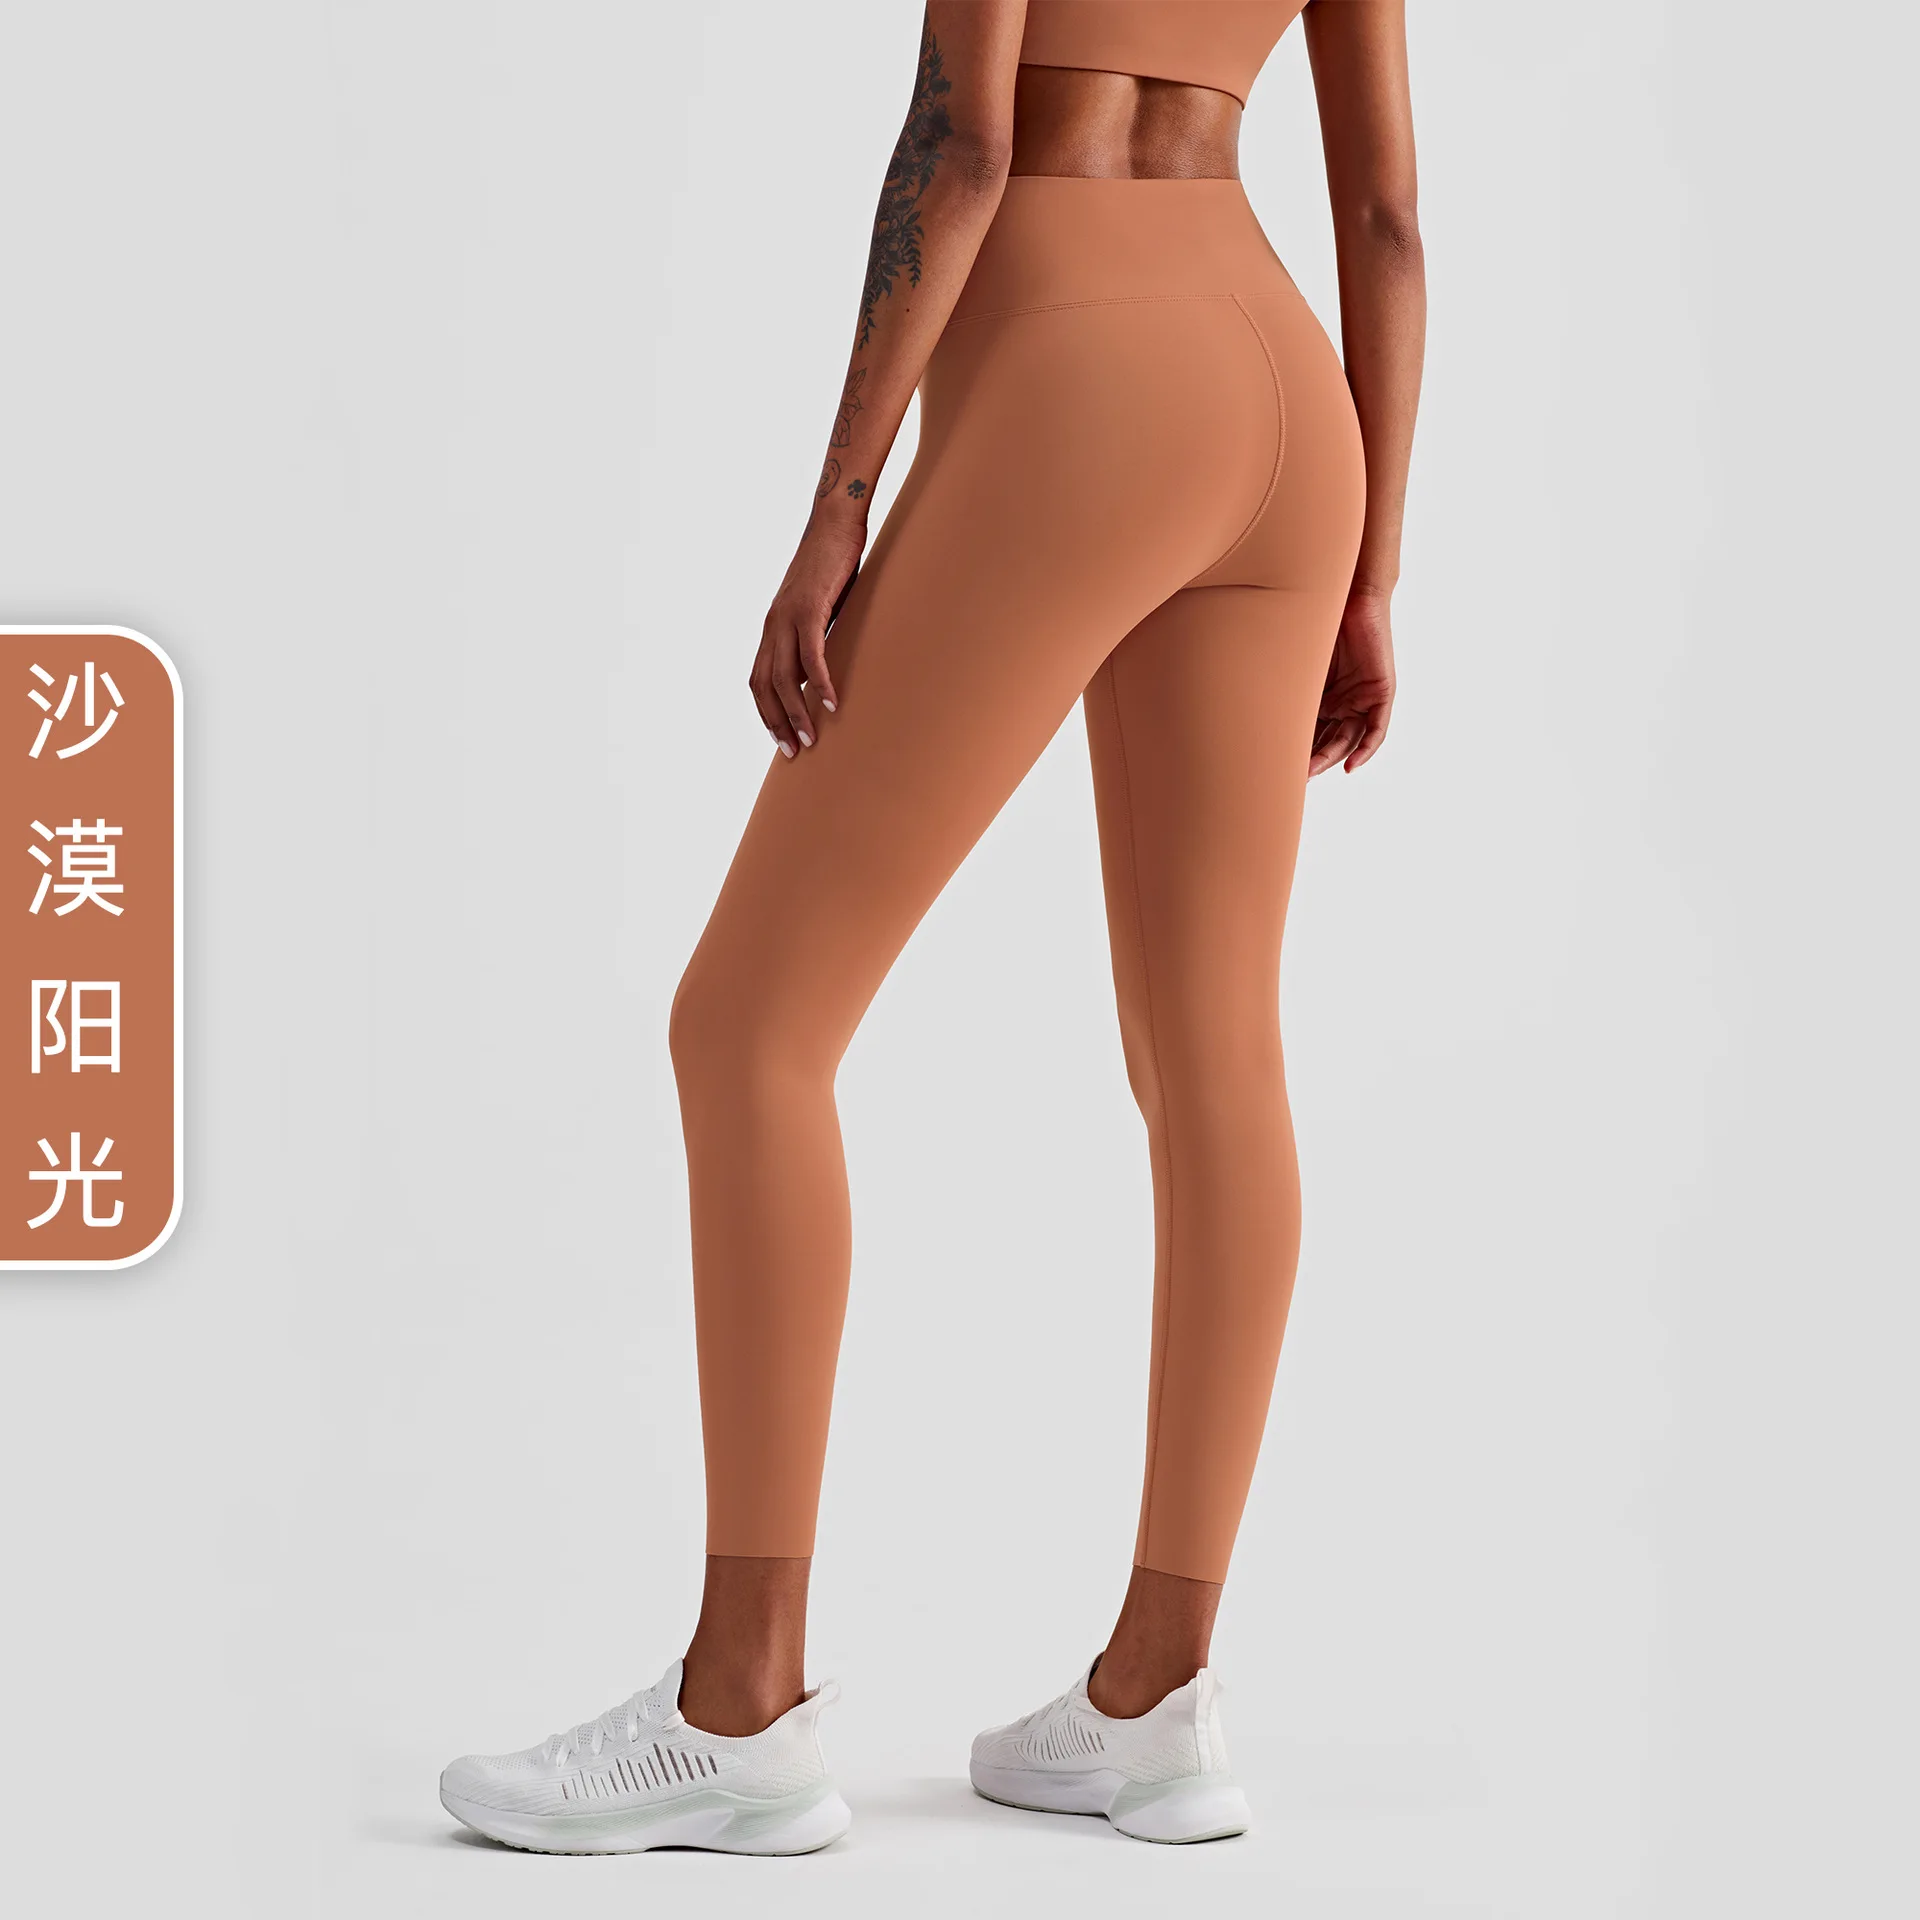 Custom Gym Sportswear Women Fitness Yoga Active Sports Butt Lift Tights Yoga Pants High Waist Recycled Fabric Yoga Leggings